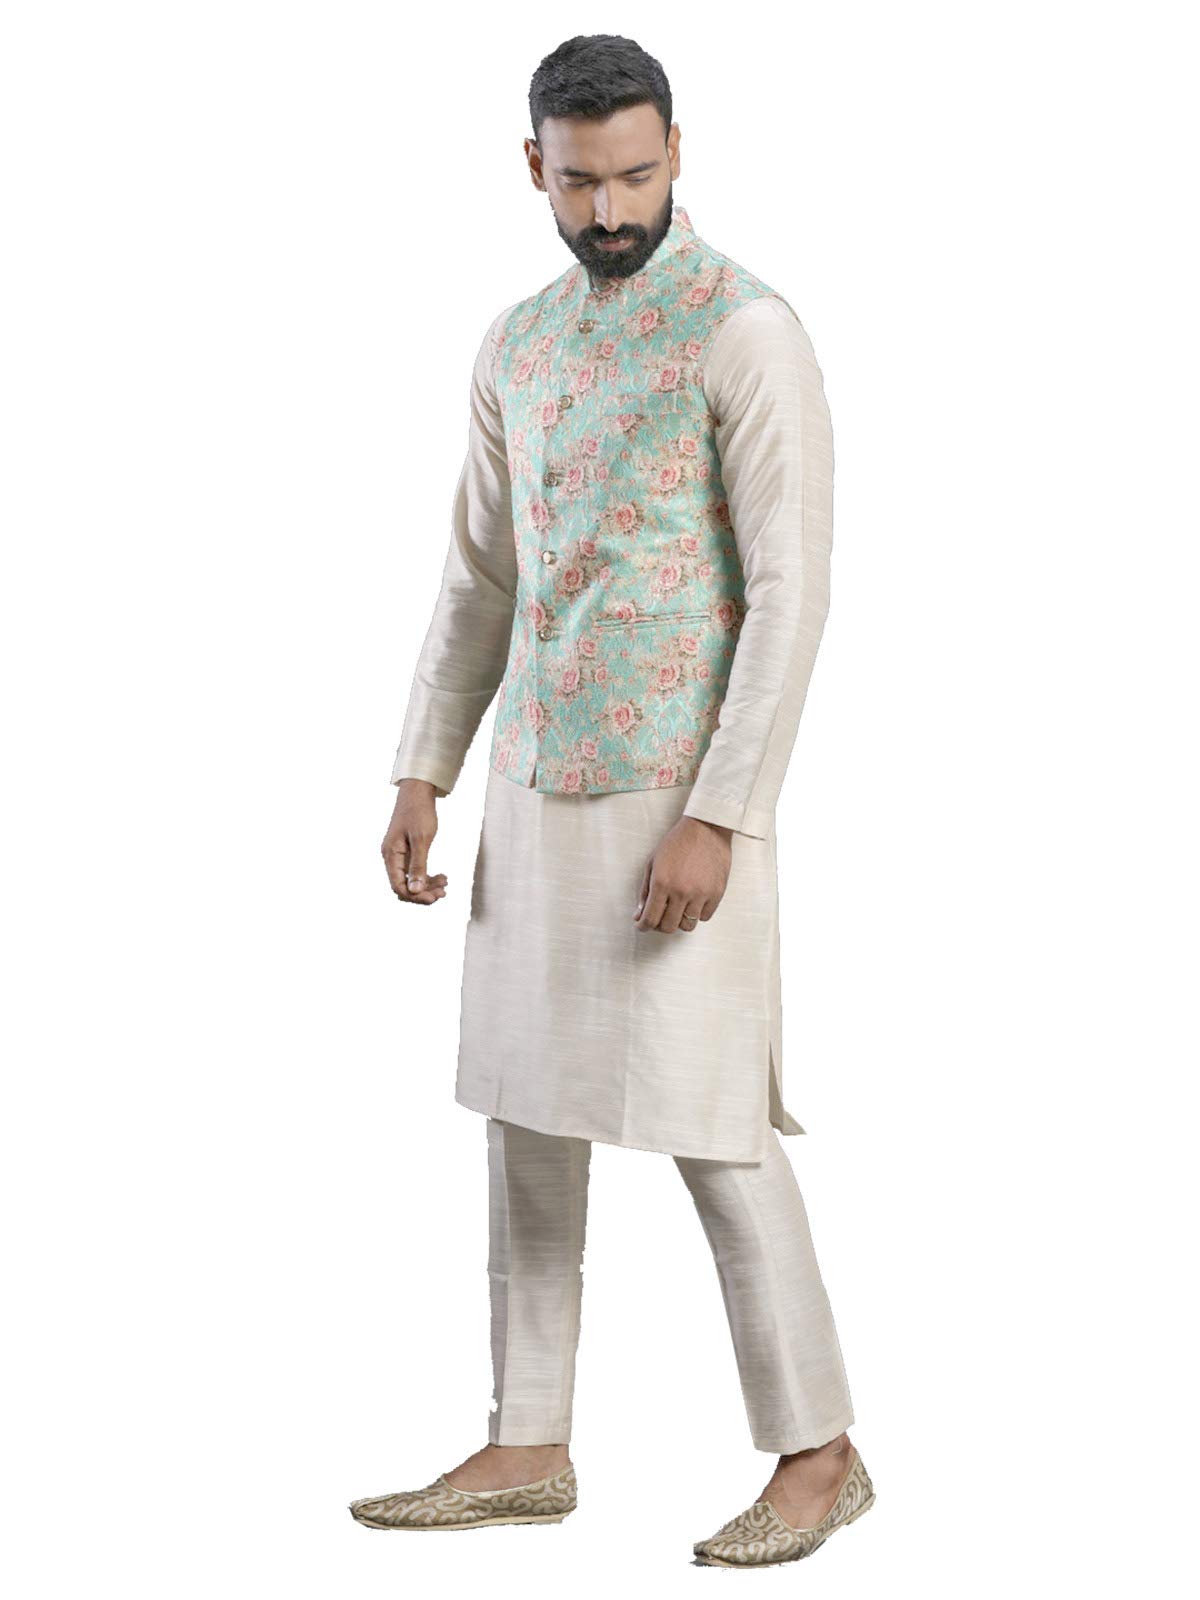 Elina fashion Men's Indian Cotton Kurta Pajama And Printed Nehru Jacket (Waistcoat) Indian Wedding Ethnic Diwali Puja Set